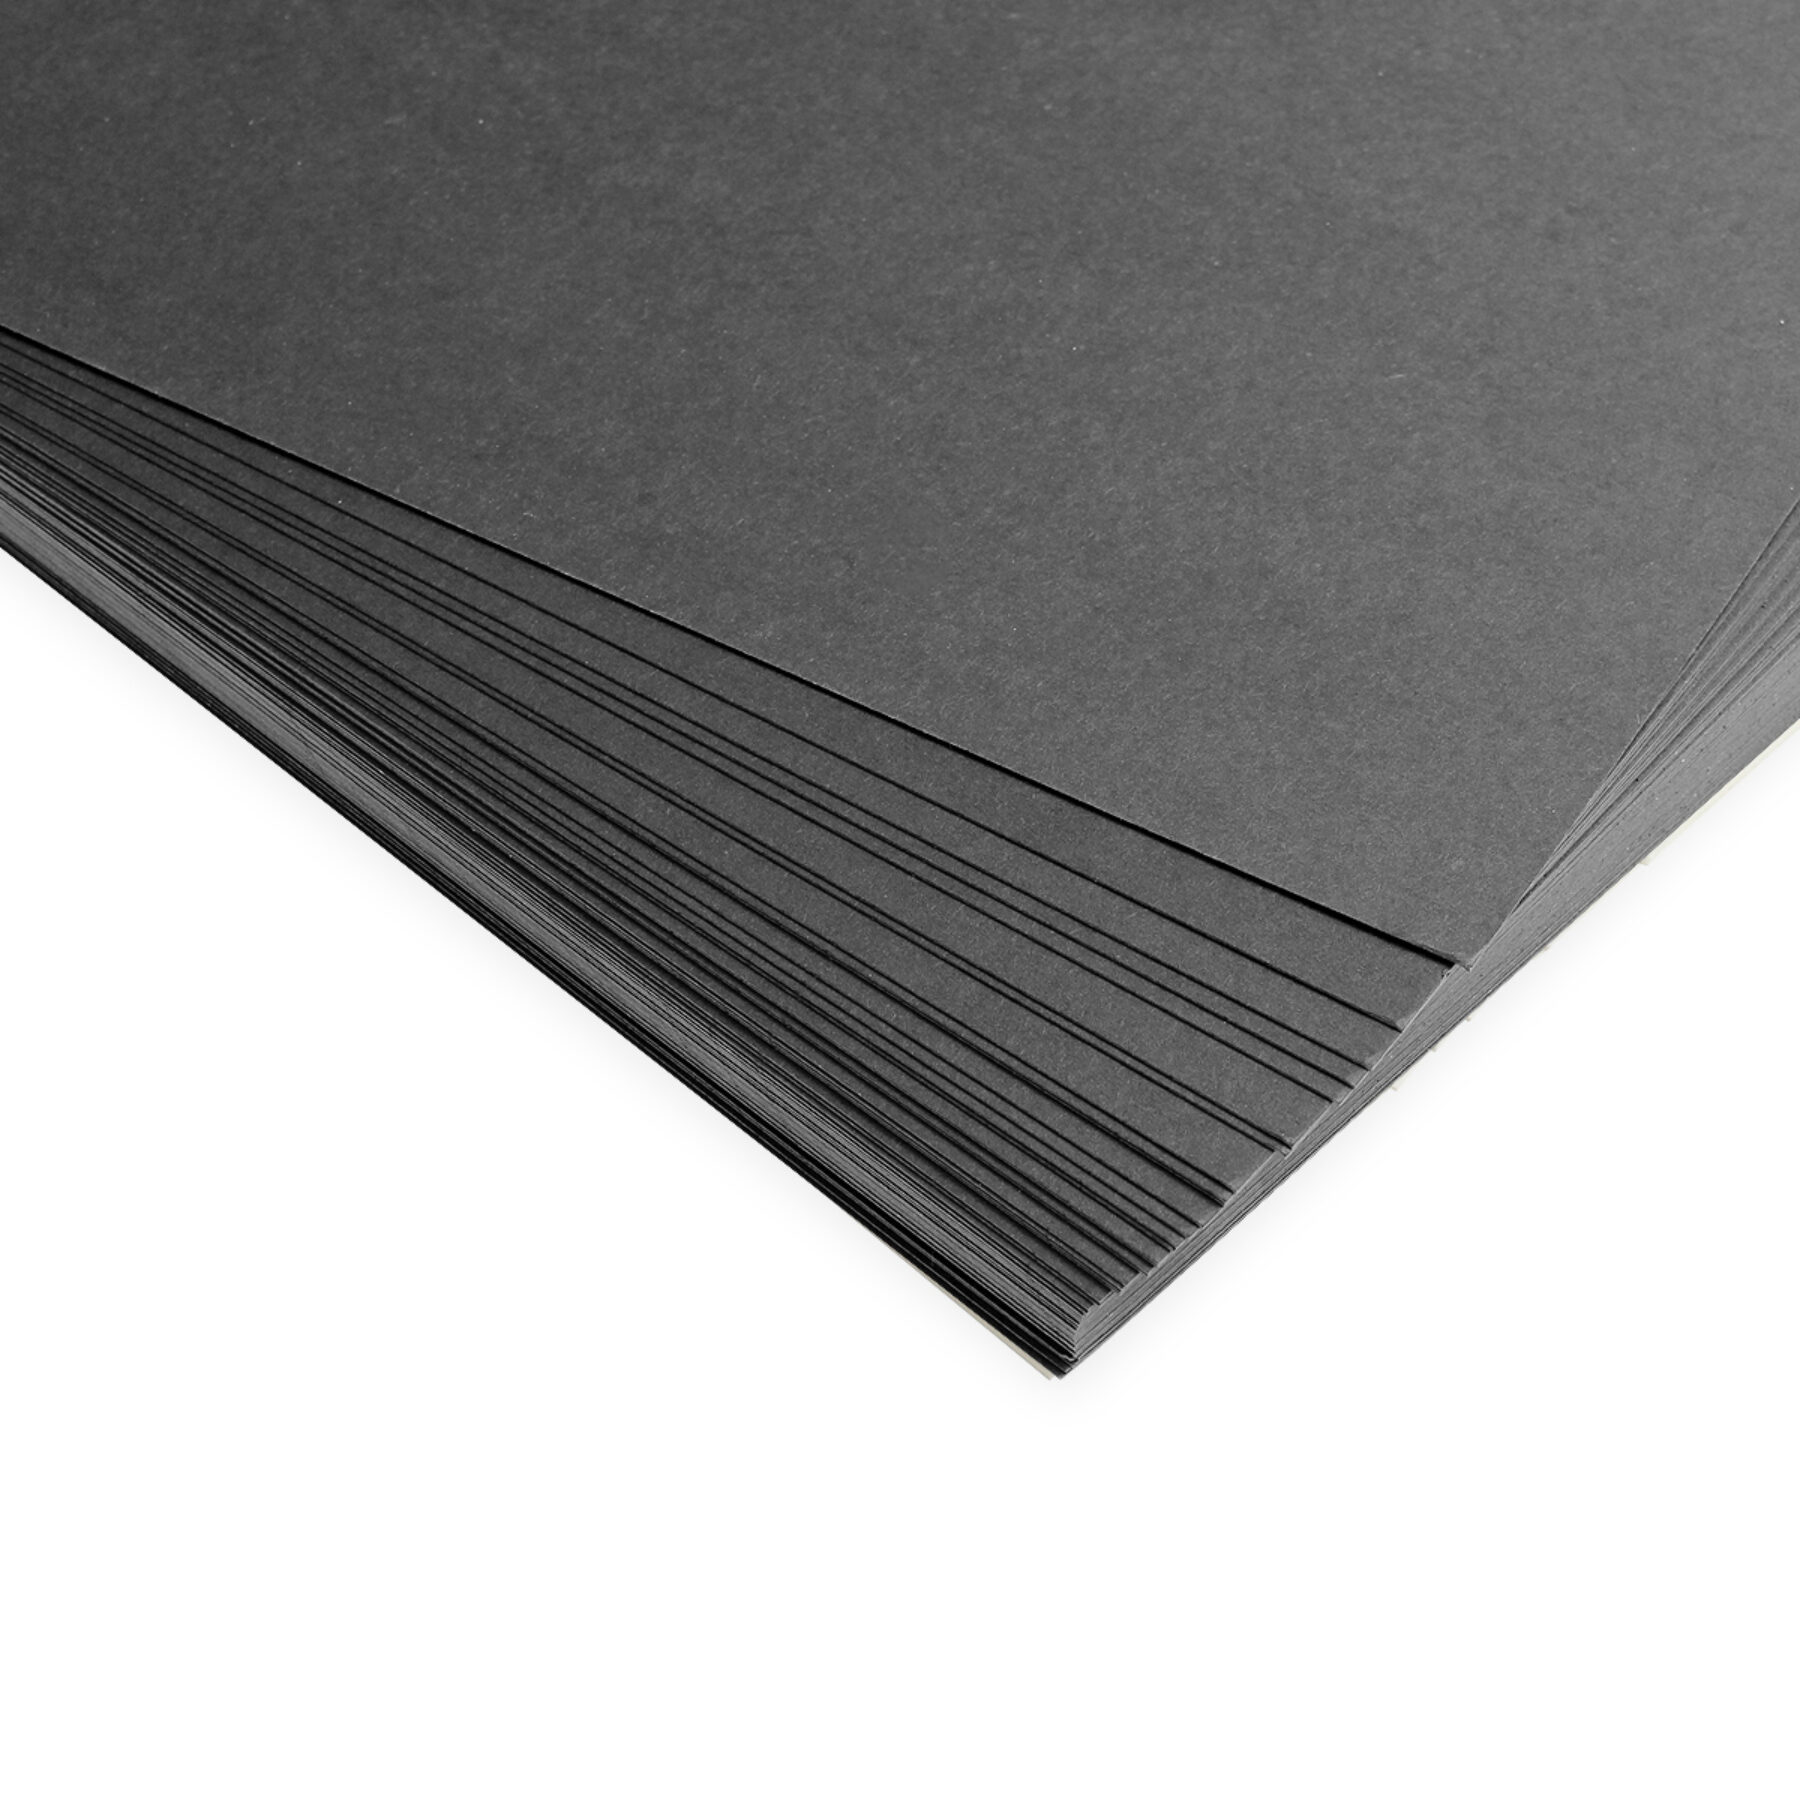 A4 Black Card (50 Sheets)